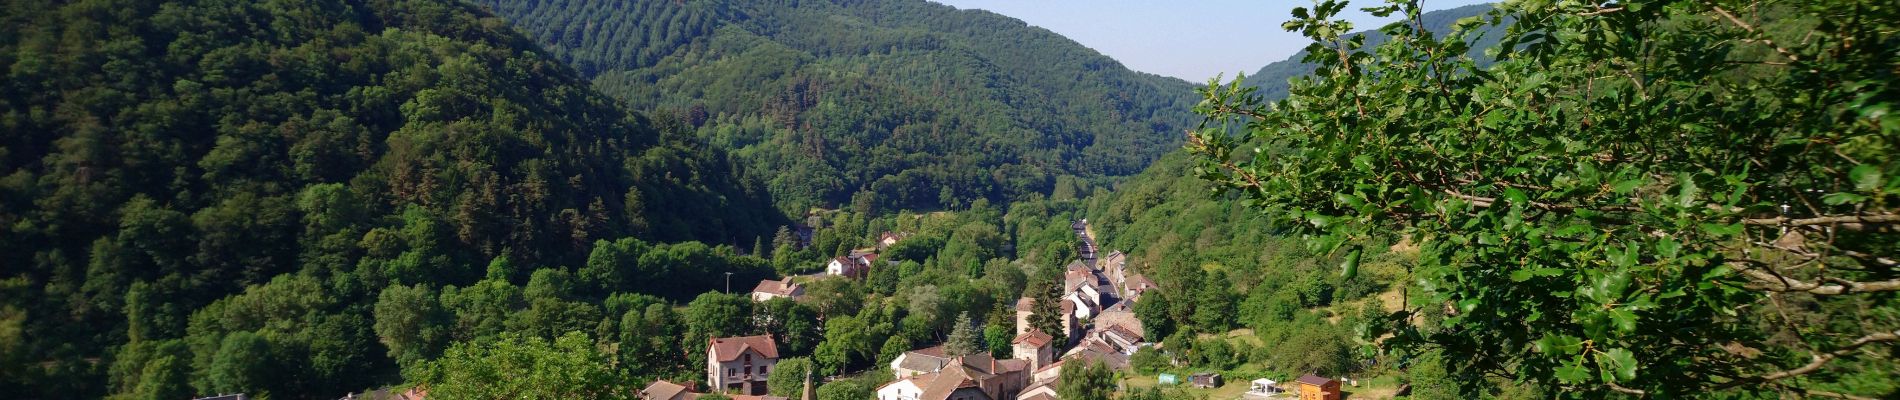 Excursión Senderismo Ferrières-Saint-Mary - Cantal - Ferrières-Saint-Mary - Gorges de la Bouzaire - 7.7km 350m 2h50 - 2019 07 01 - Photo